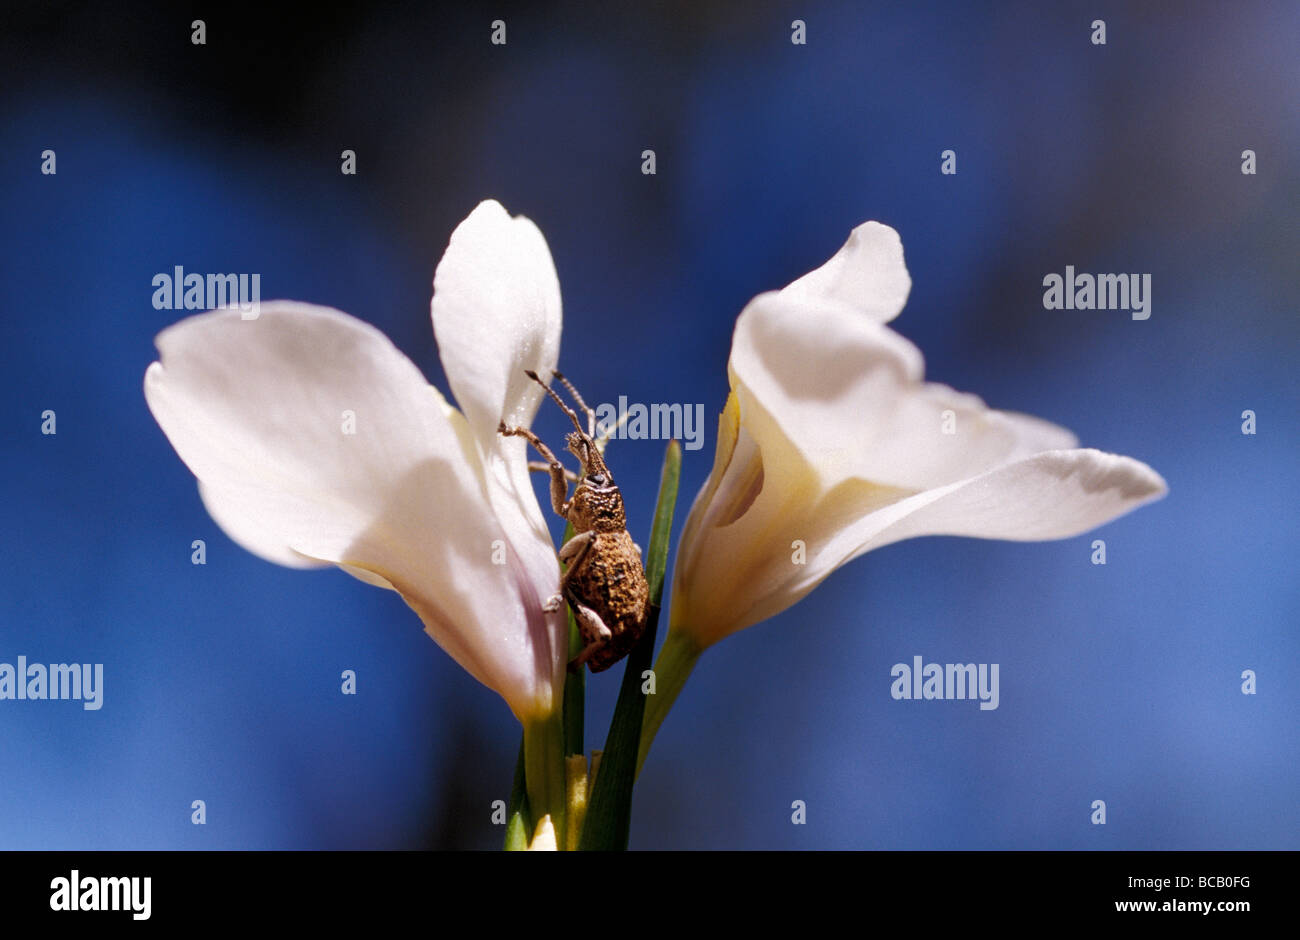 A Weevil Beetle on a Butterfly Flag flower against a deep blue sky. Stock Photo